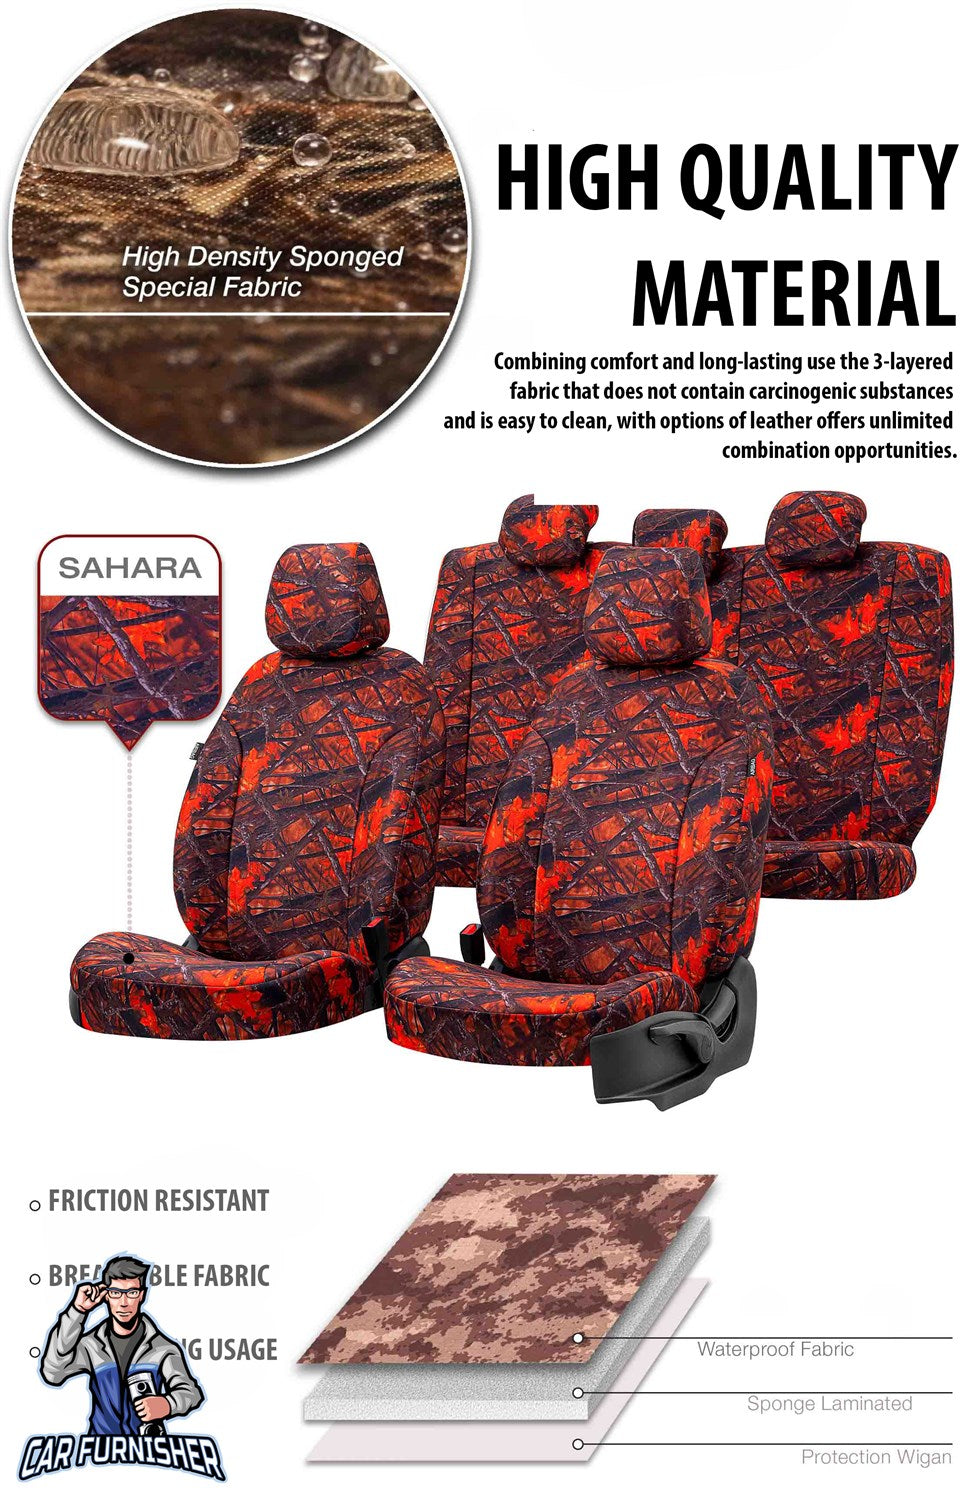 Ssangyong Korando Seat Covers Camouflage Waterproof Design Gobi Camo Waterproof Fabric